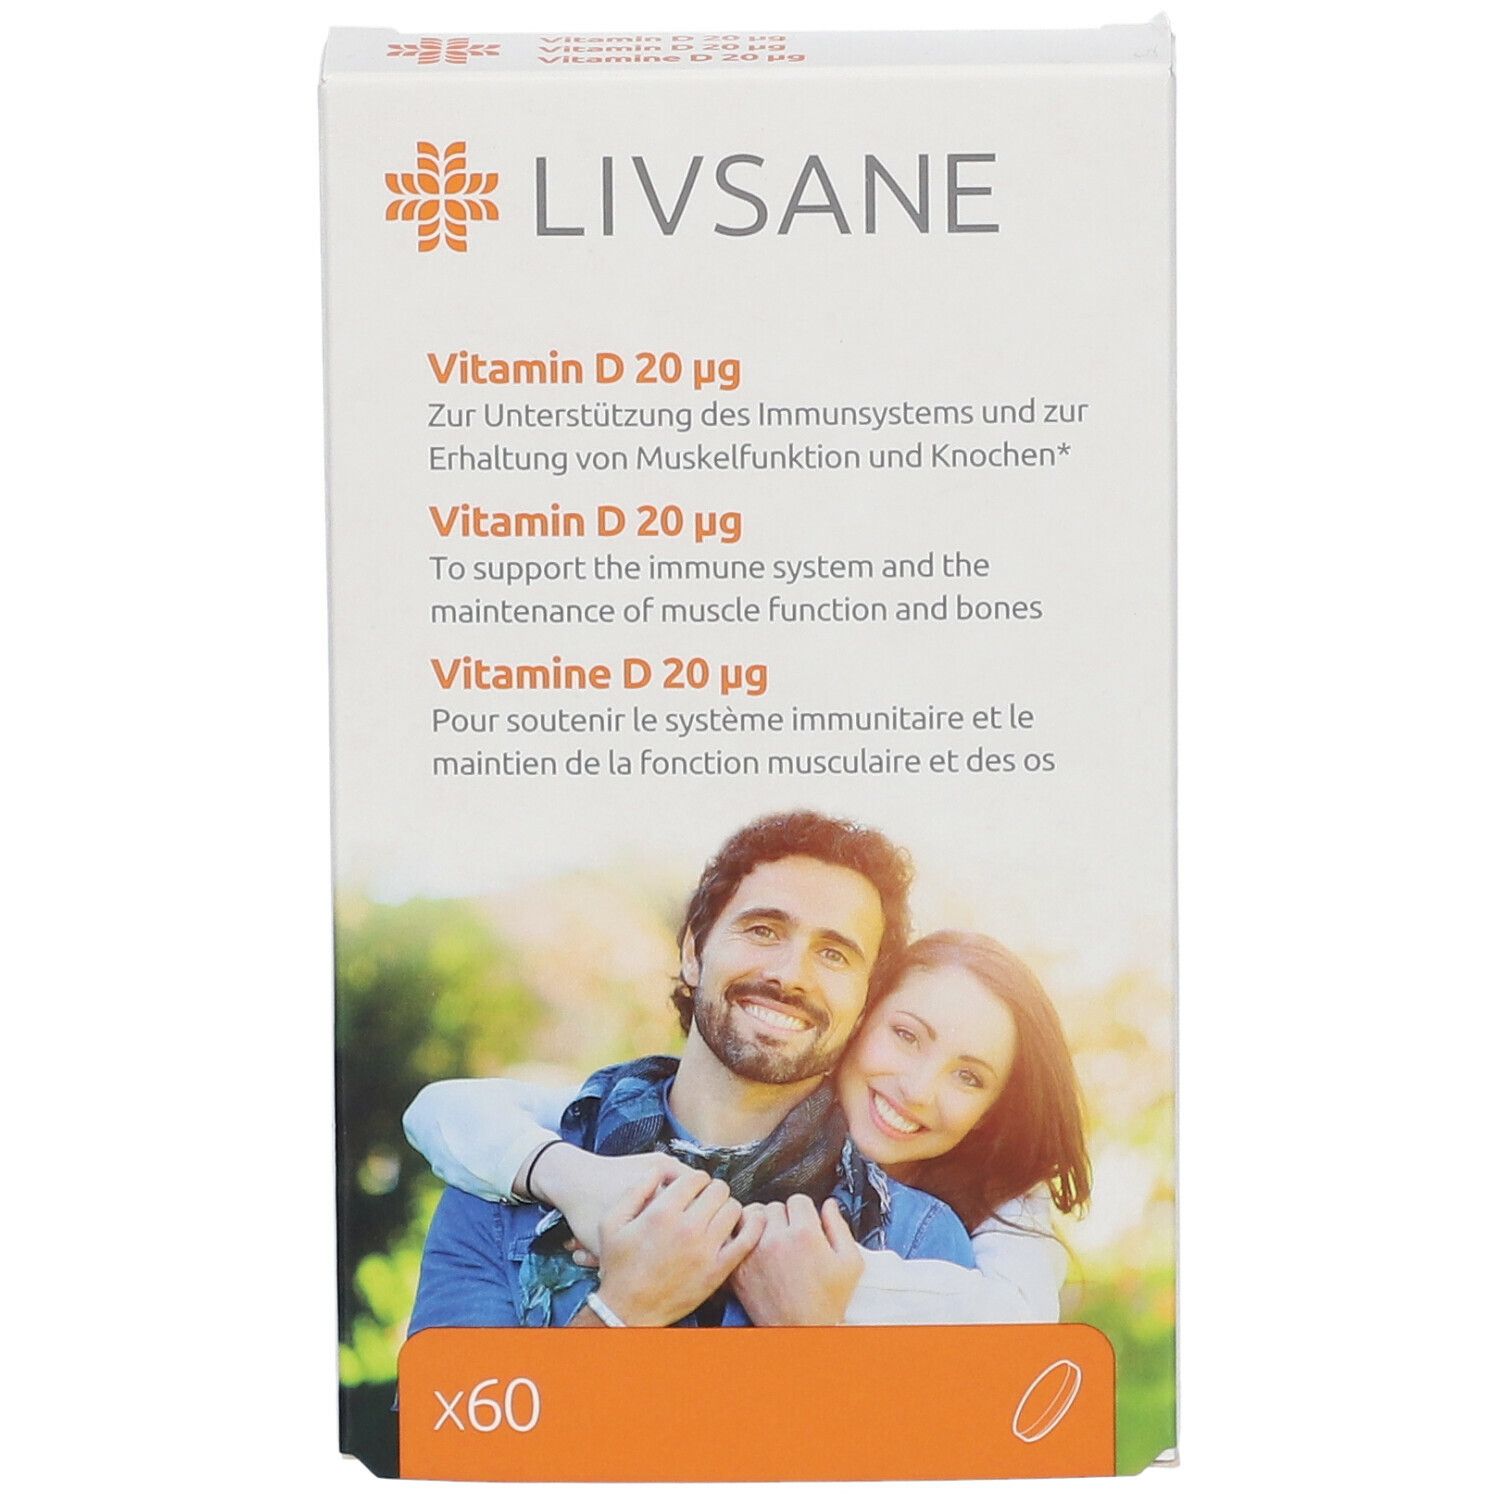 LIVSANE Vitamin D 20 µg